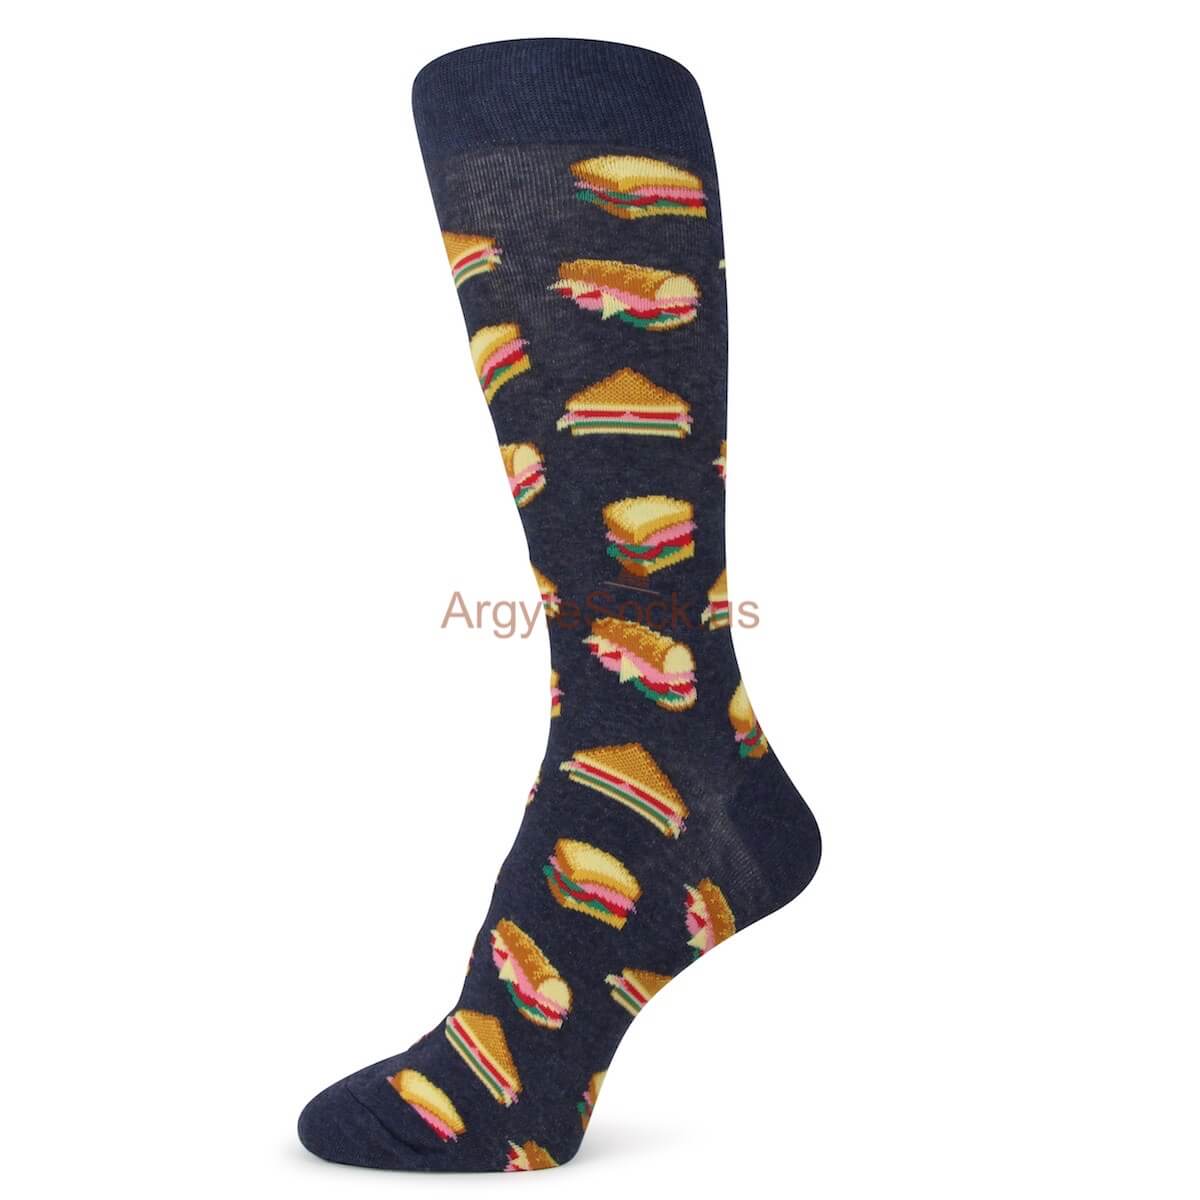 Clubhouse Sandwich Themed Socks for Men